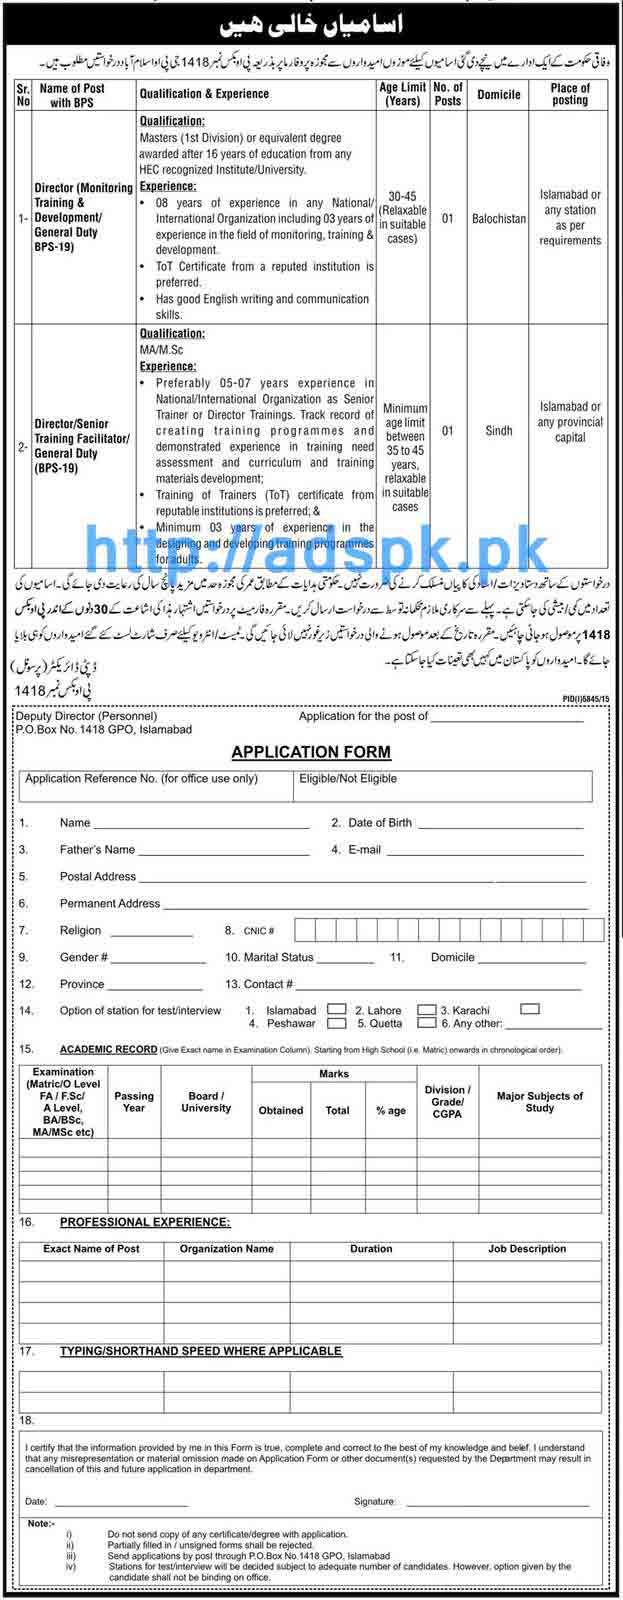 Federal Govt. Jobs Islamabad Jobs 2016 for Director (Monitoring Training & Development) Director Senior Training Facilitator Last Date 05-06-2016 Apply Now